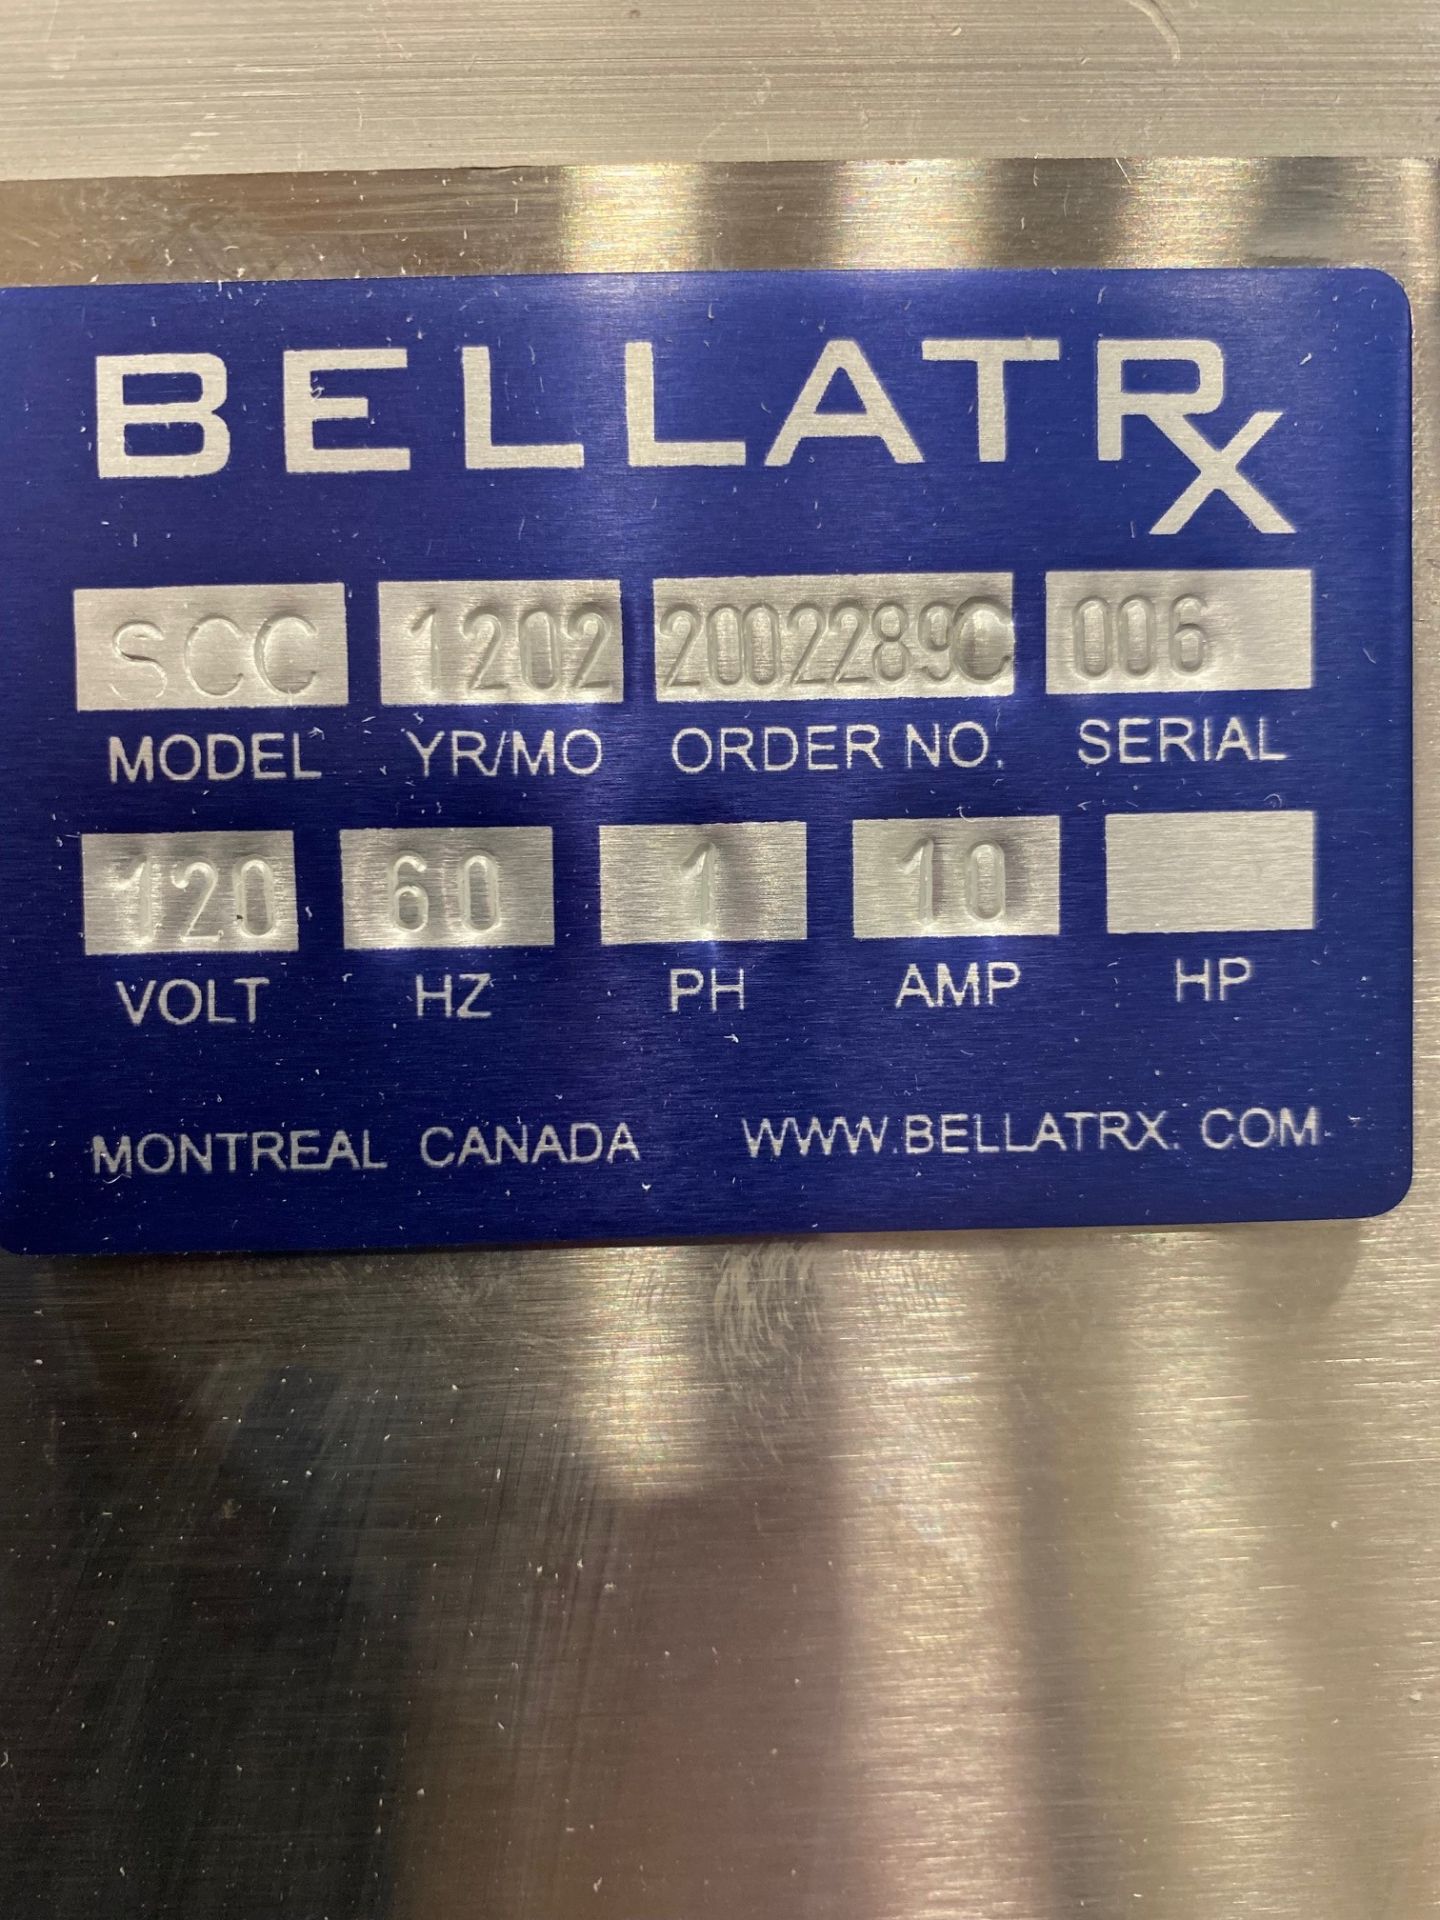 Bellatrx Secure Chuck Capper-Model SCC, Serial: 111215006, 120 Volts, 60 Hz, 1 Phase, 10 Amp, Mfg - Image 12 of 13